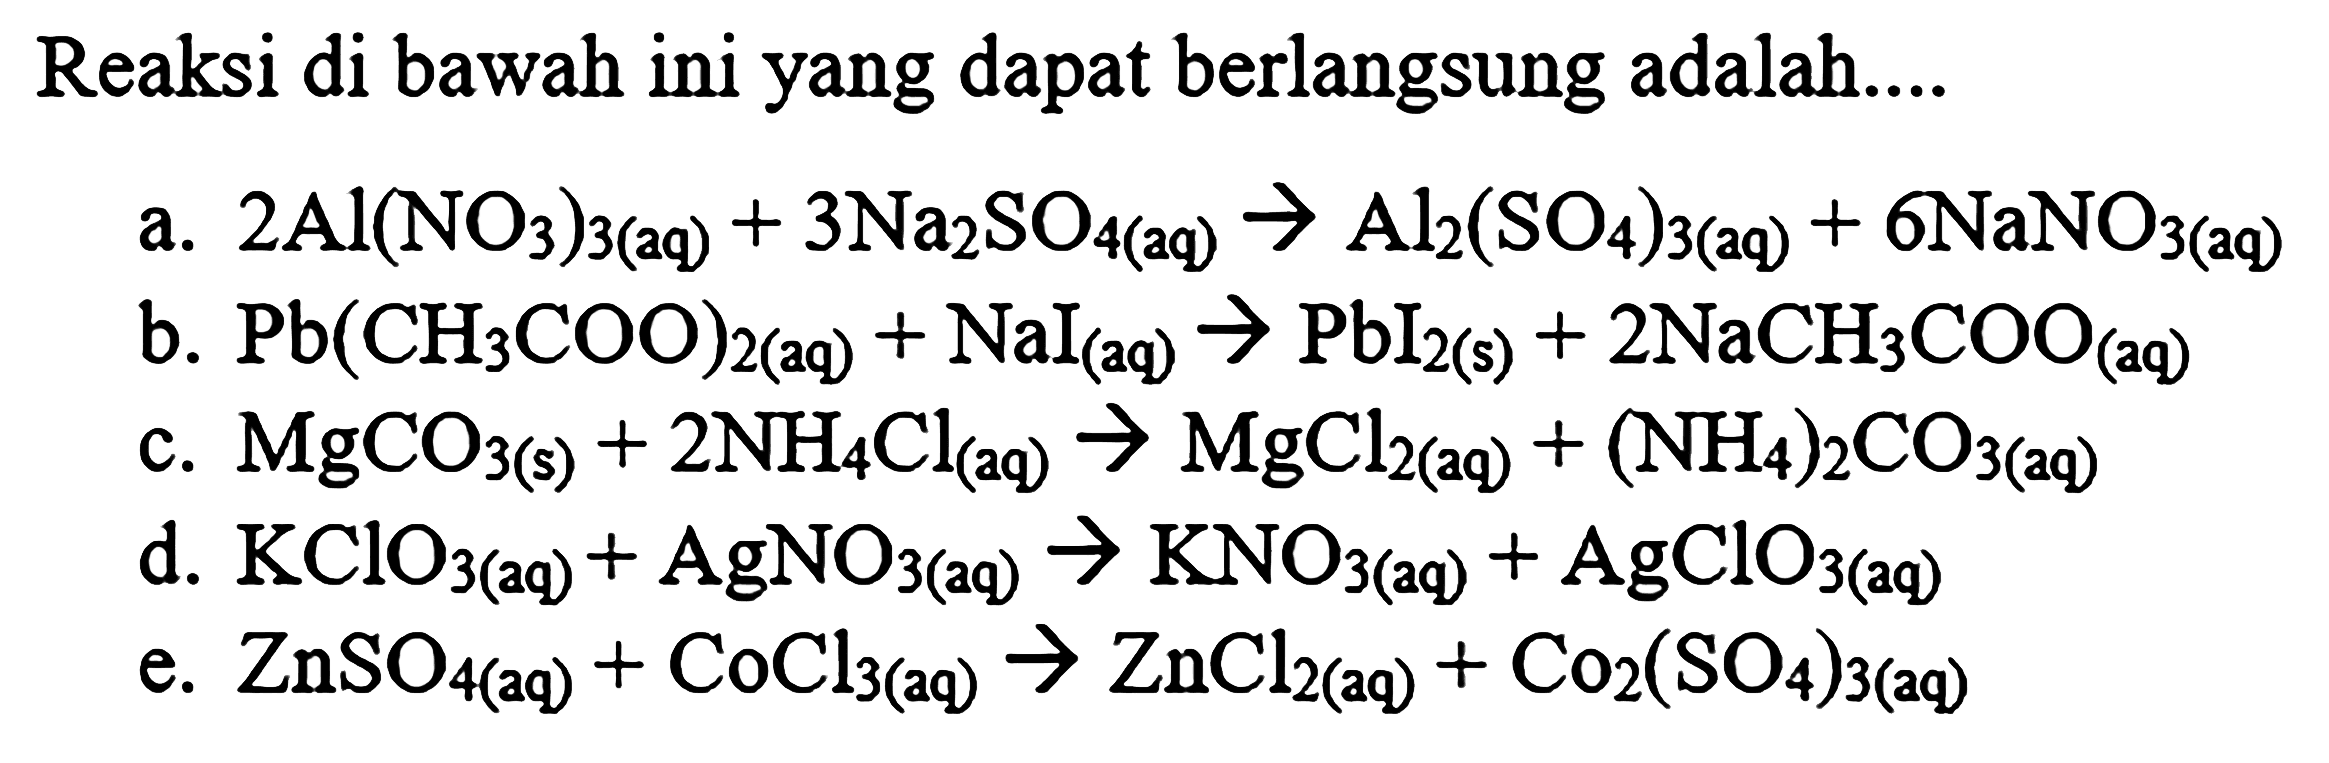 Reaksi di bawah ini yang dapat berlangsung adalah....
a.  2 Al(NO3)3(2 q)+3 Na2 SO4(2 q) -> Al2(SO4)3(a q)+6 NaNO3(a q)
b. Pb(CH3 COO)2(aq)+NaI(aq) -> PbI2(s)+2 NaCH3 COO(aq)
c. MgCO3(s)+2 NH4 Cl(aq) -> MgCl2(aq)+(NH4)2 CO3(aq)
d. KClO3   (aq) +AgNO3   (aq)  -> KNO3   (aq) +AgClO3   (aq) 
e. ZnSO4(aq)+CoCl3(aq) -> ZnCl2(aq)+Co2(SO4)3(aq)